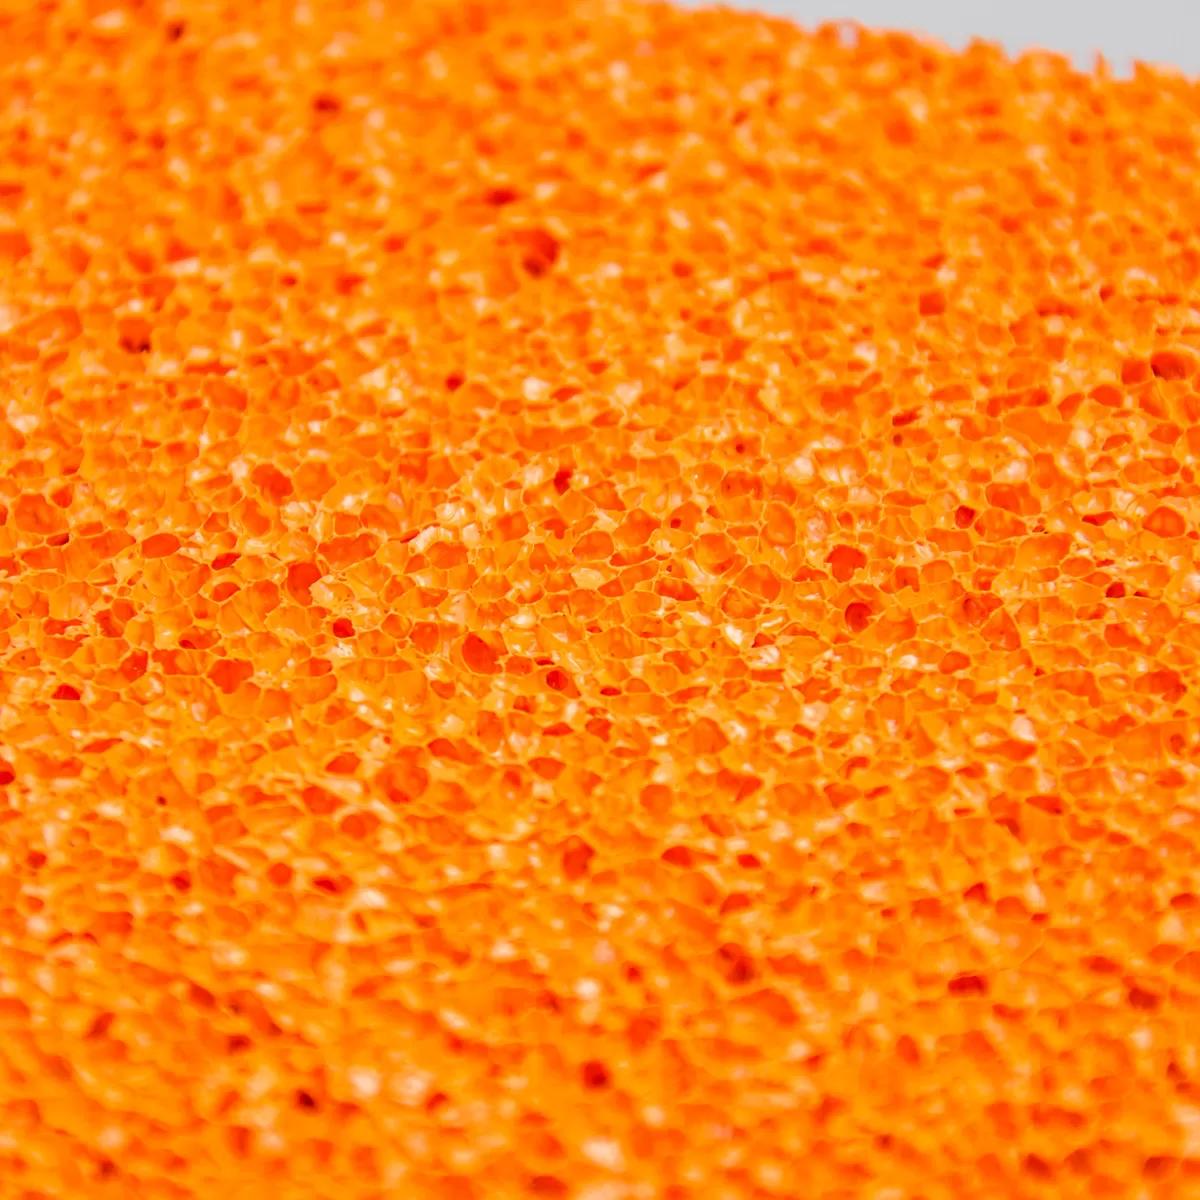 Orange rubber sponge float 